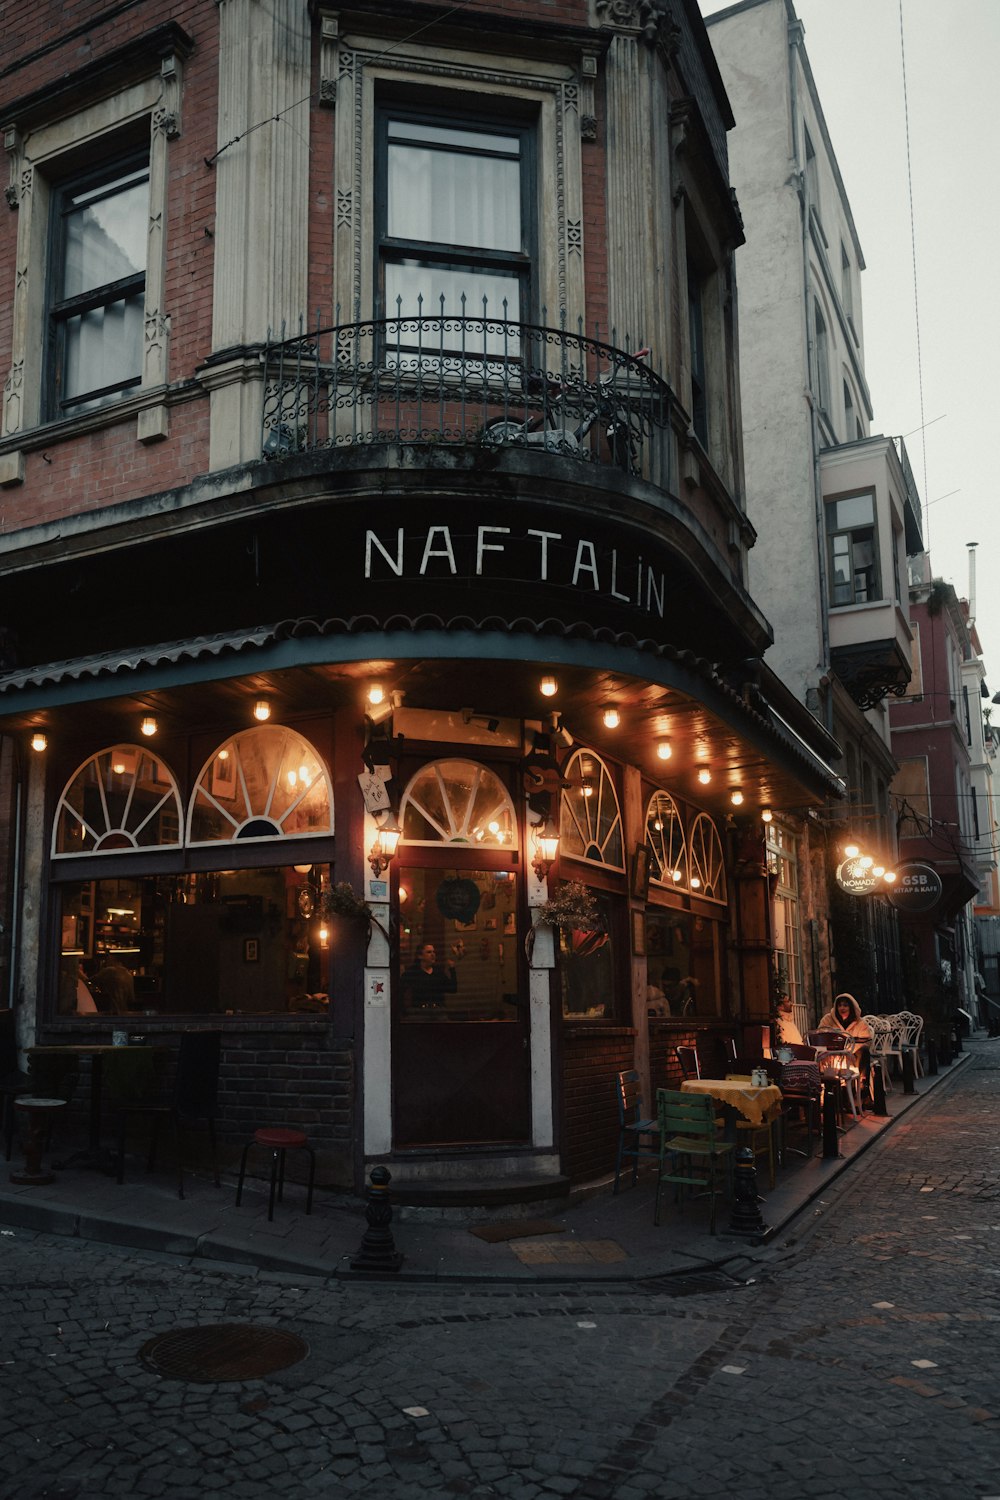 a street corner with a restaurant called naftalim